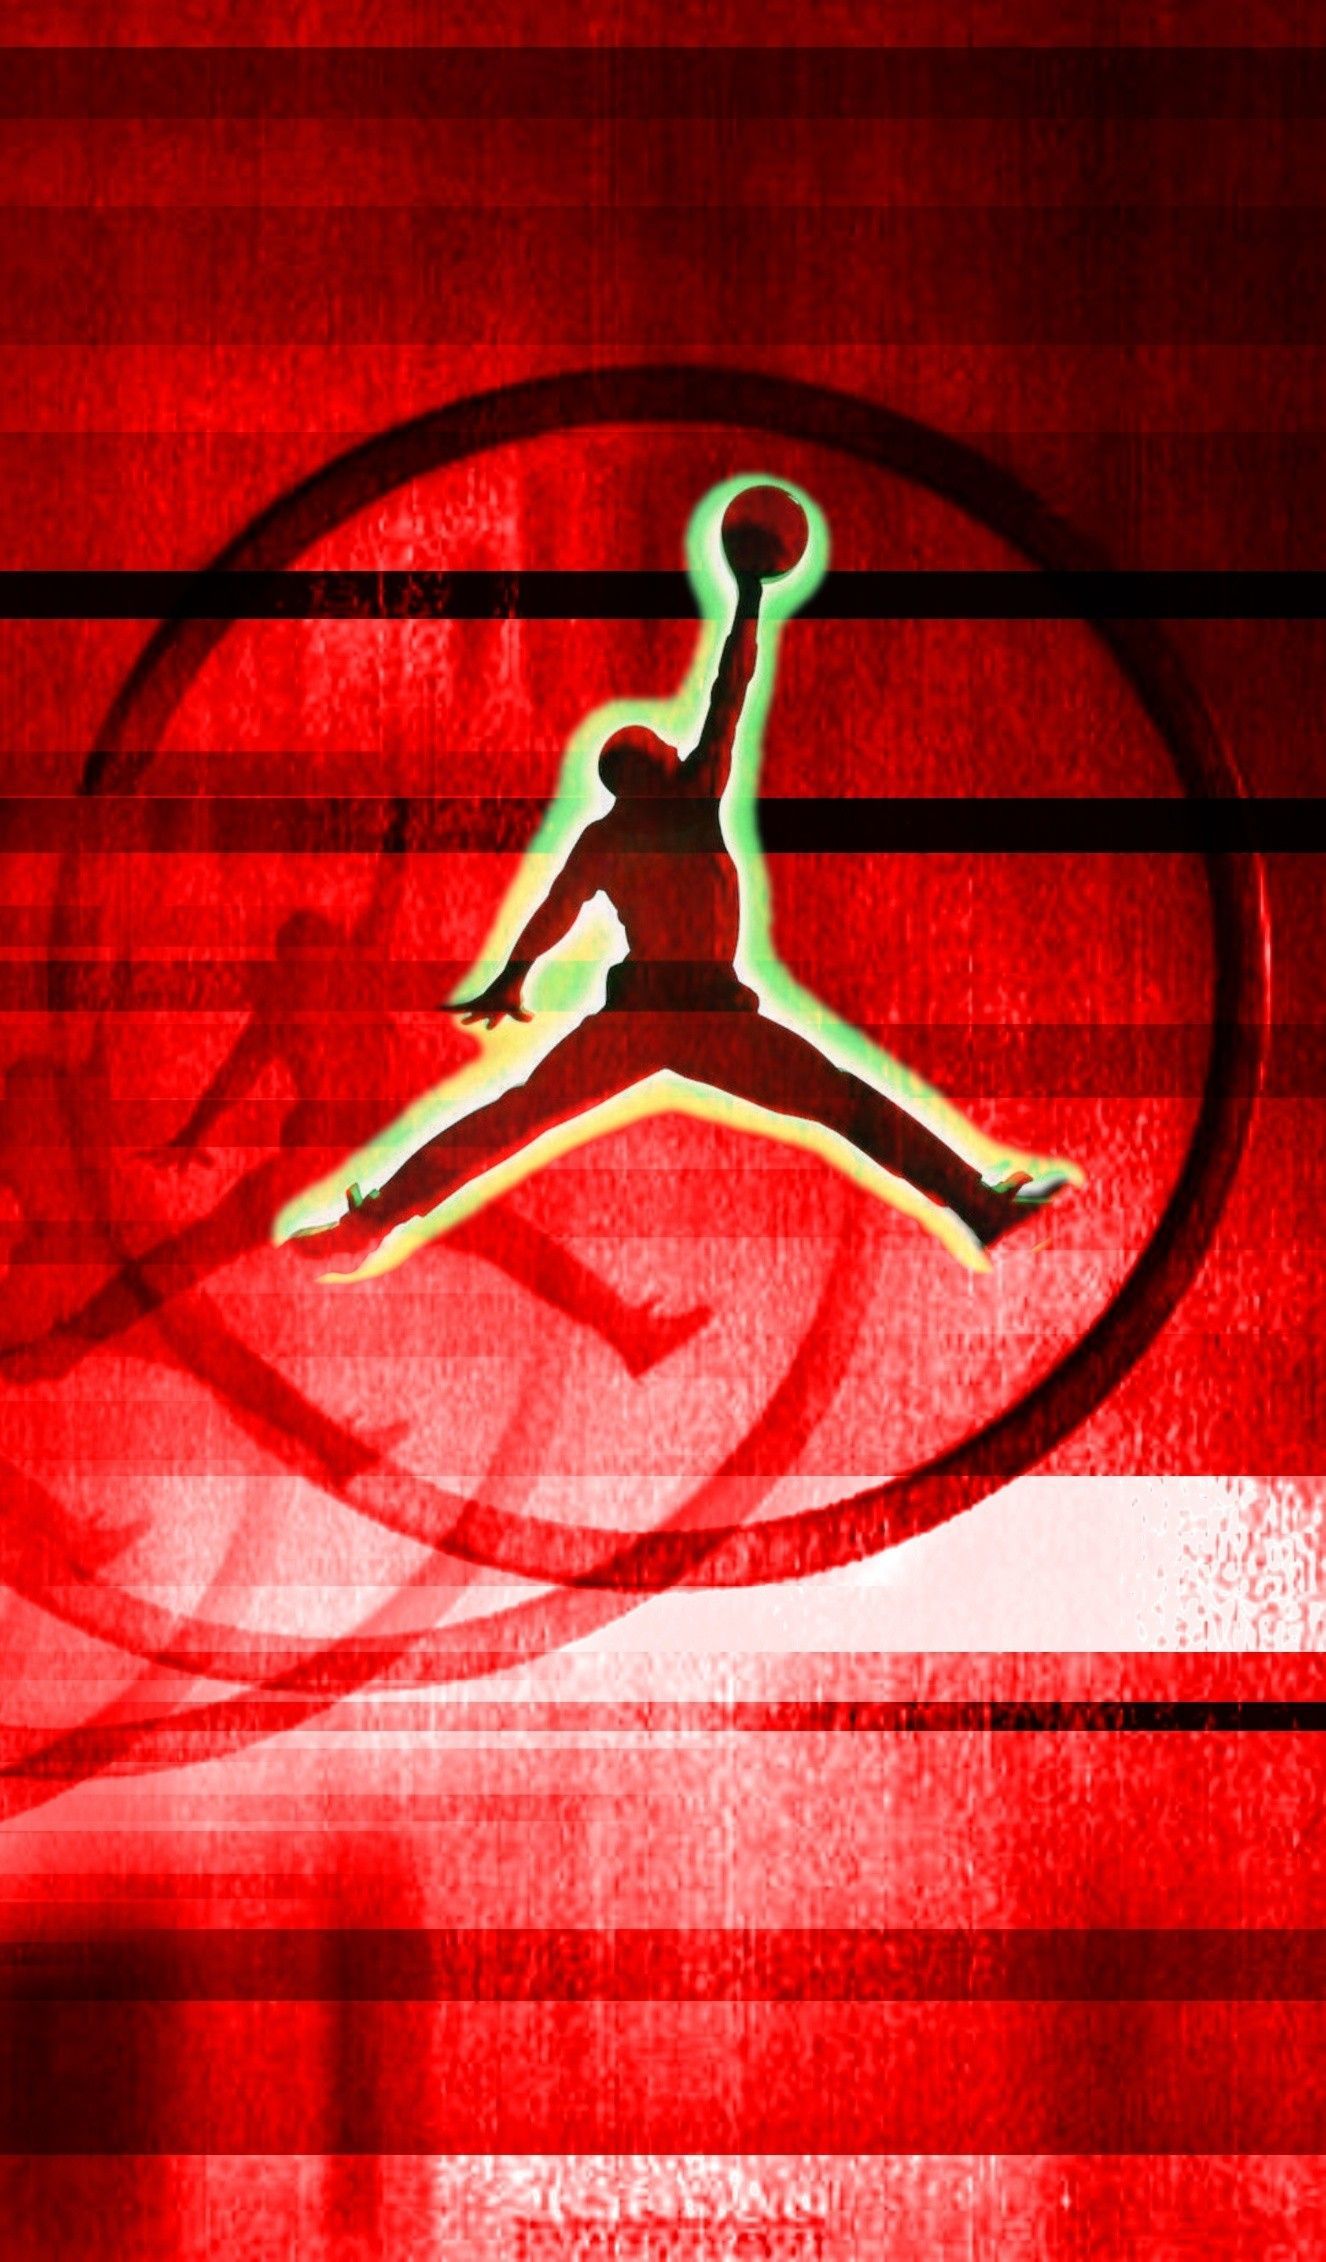 Nike wallpaper. Jordan logo wallpaper, Nike wallpaper, Adidas logo wallpaper